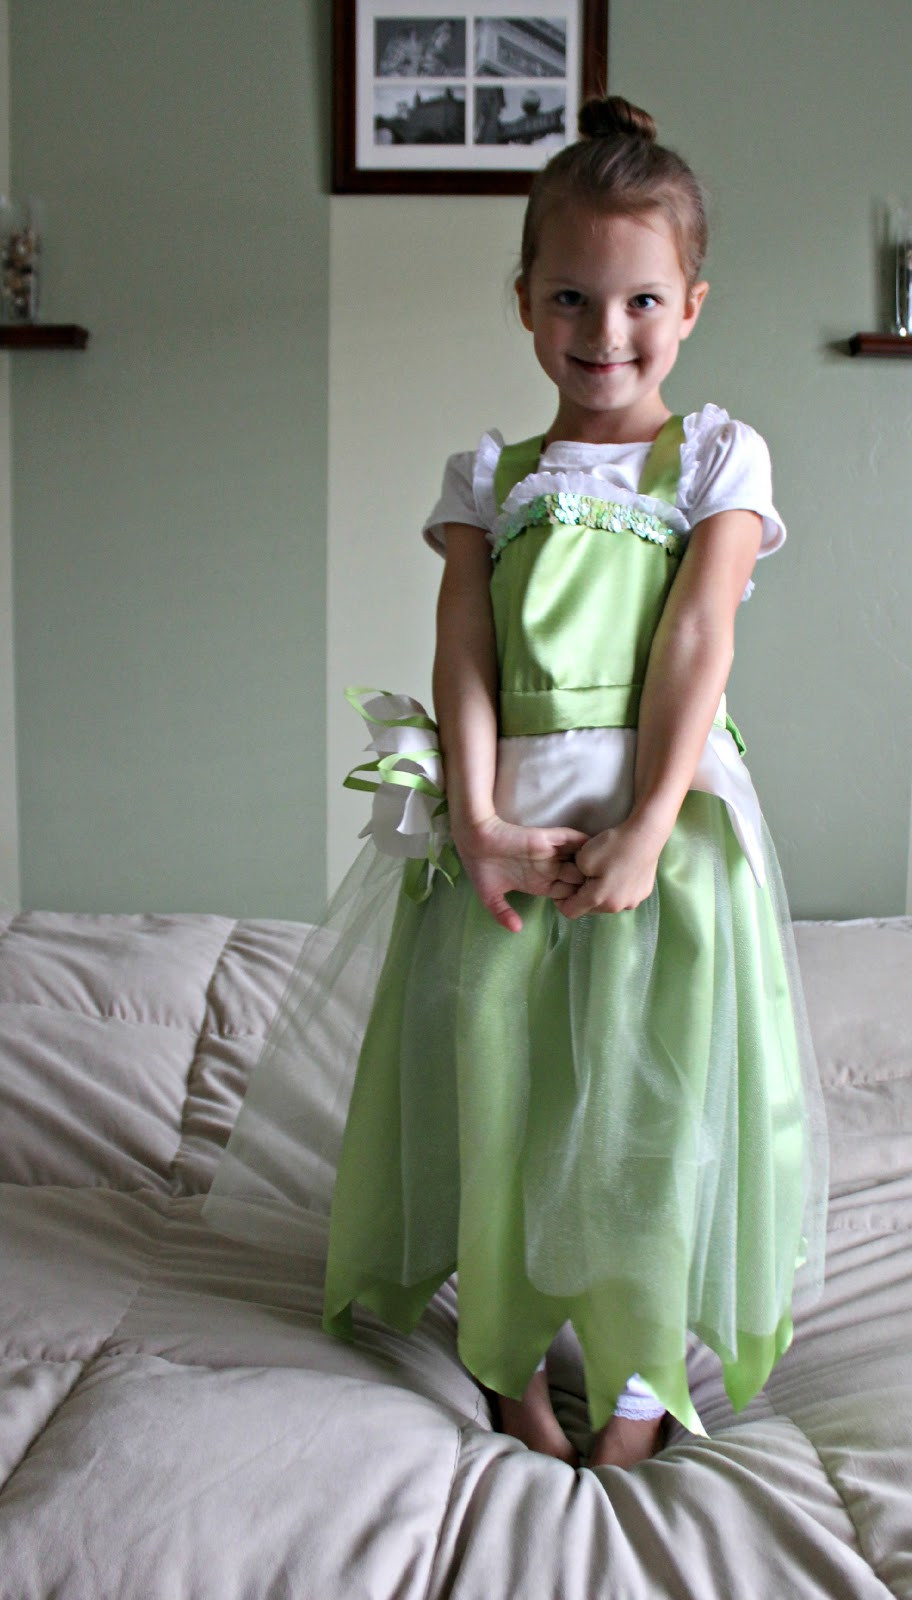 Best ideas about Princess Tiana Costume DIY
. Save or Pin RisC Handmade Homemade Princess Tiana Costume Now.